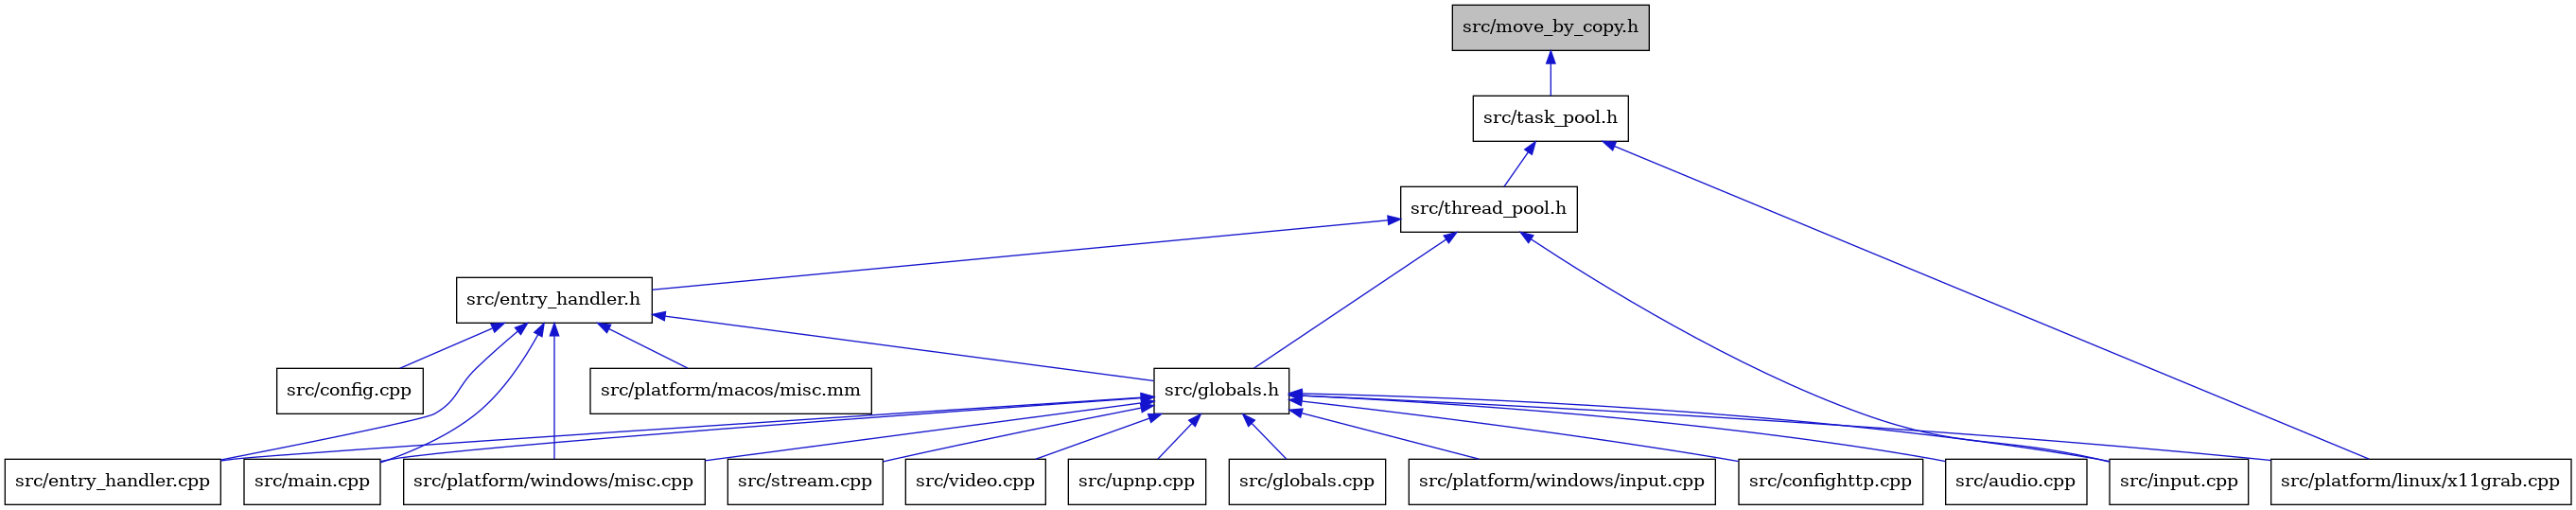 digraph {
    graph [bgcolor="#00000000"]
    node [shape=rectangle style=filled fillcolor="#FFFFFF" font=Helvetica padding=2]
    edge [color="#1414CE"]
    "17" [label="src/upnp.cpp" tooltip="src/upnp.cpp"]
    "15" [label="src/platform/windows/misc.cpp" tooltip="src/platform/windows/misc.cpp"]
    "19" [label="src/platform/macos/misc.mm" tooltip="src/platform/macos/misc.mm"]
    "4" [label="src/thread_pool.h" tooltip="src/thread_pool.h"]
    "3" [label="src/platform/linux/x11grab.cpp" tooltip="src/platform/linux/x11grab.cpp"]
    "11" [label="src/globals.cpp" tooltip="src/globals.cpp"]
    "1" [label="src/move_by_copy.h" tooltip="src/move_by_copy.h" fillcolor="#BFBFBF"]
    "8" [label="src/globals.h" tooltip="src/globals.h"]
    "5" [label="src/entry_handler.h" tooltip="src/entry_handler.h"]
    "6" [label="src/config.cpp" tooltip="src/config.cpp"]
    "14" [label="src/platform/windows/input.cpp" tooltip="src/platform/windows/input.cpp"]
    "12" [label="src/input.cpp" tooltip="src/input.cpp"]
    "7" [label="src/entry_handler.cpp" tooltip="src/entry_handler.cpp"]
    "2" [label="src/task_pool.h" tooltip="src/task_pool.h"]
    "10" [label="src/confighttp.cpp" tooltip="src/confighttp.cpp"]
    "9" [label="src/audio.cpp" tooltip="src/audio.cpp"]
    "16" [label="src/stream.cpp" tooltip="src/stream.cpp"]
    "13" [label="src/main.cpp" tooltip="src/main.cpp"]
    "18" [label="src/video.cpp" tooltip="src/video.cpp"]
    "4" -> "5" [dir=back tooltip="include"]
    "4" -> "8" [dir=back tooltip="include"]
    "4" -> "12" [dir=back tooltip="include"]
    "1" -> "2" [dir=back tooltip="include"]
    "8" -> "9" [dir=back tooltip="include"]
    "8" -> "10" [dir=back tooltip="include"]
    "8" -> "7" [dir=back tooltip="include"]
    "8" -> "11" [dir=back tooltip="include"]
    "8" -> "12" [dir=back tooltip="include"]
    "8" -> "13" [dir=back tooltip="include"]
    "8" -> "3" [dir=back tooltip="include"]
    "8" -> "14" [dir=back tooltip="include"]
    "8" -> "15" [dir=back tooltip="include"]
    "8" -> "16" [dir=back tooltip="include"]
    "8" -> "17" [dir=back tooltip="include"]
    "8" -> "18" [dir=back tooltip="include"]
    "5" -> "6" [dir=back tooltip="include"]
    "5" -> "7" [dir=back tooltip="include"]
    "5" -> "8" [dir=back tooltip="include"]
    "5" -> "13" [dir=back tooltip="include"]
    "5" -> "19" [dir=back tooltip="include"]
    "5" -> "15" [dir=back tooltip="include"]
    "2" -> "3" [dir=back tooltip="include"]
    "2" -> "4" [dir=back tooltip="include"]
}